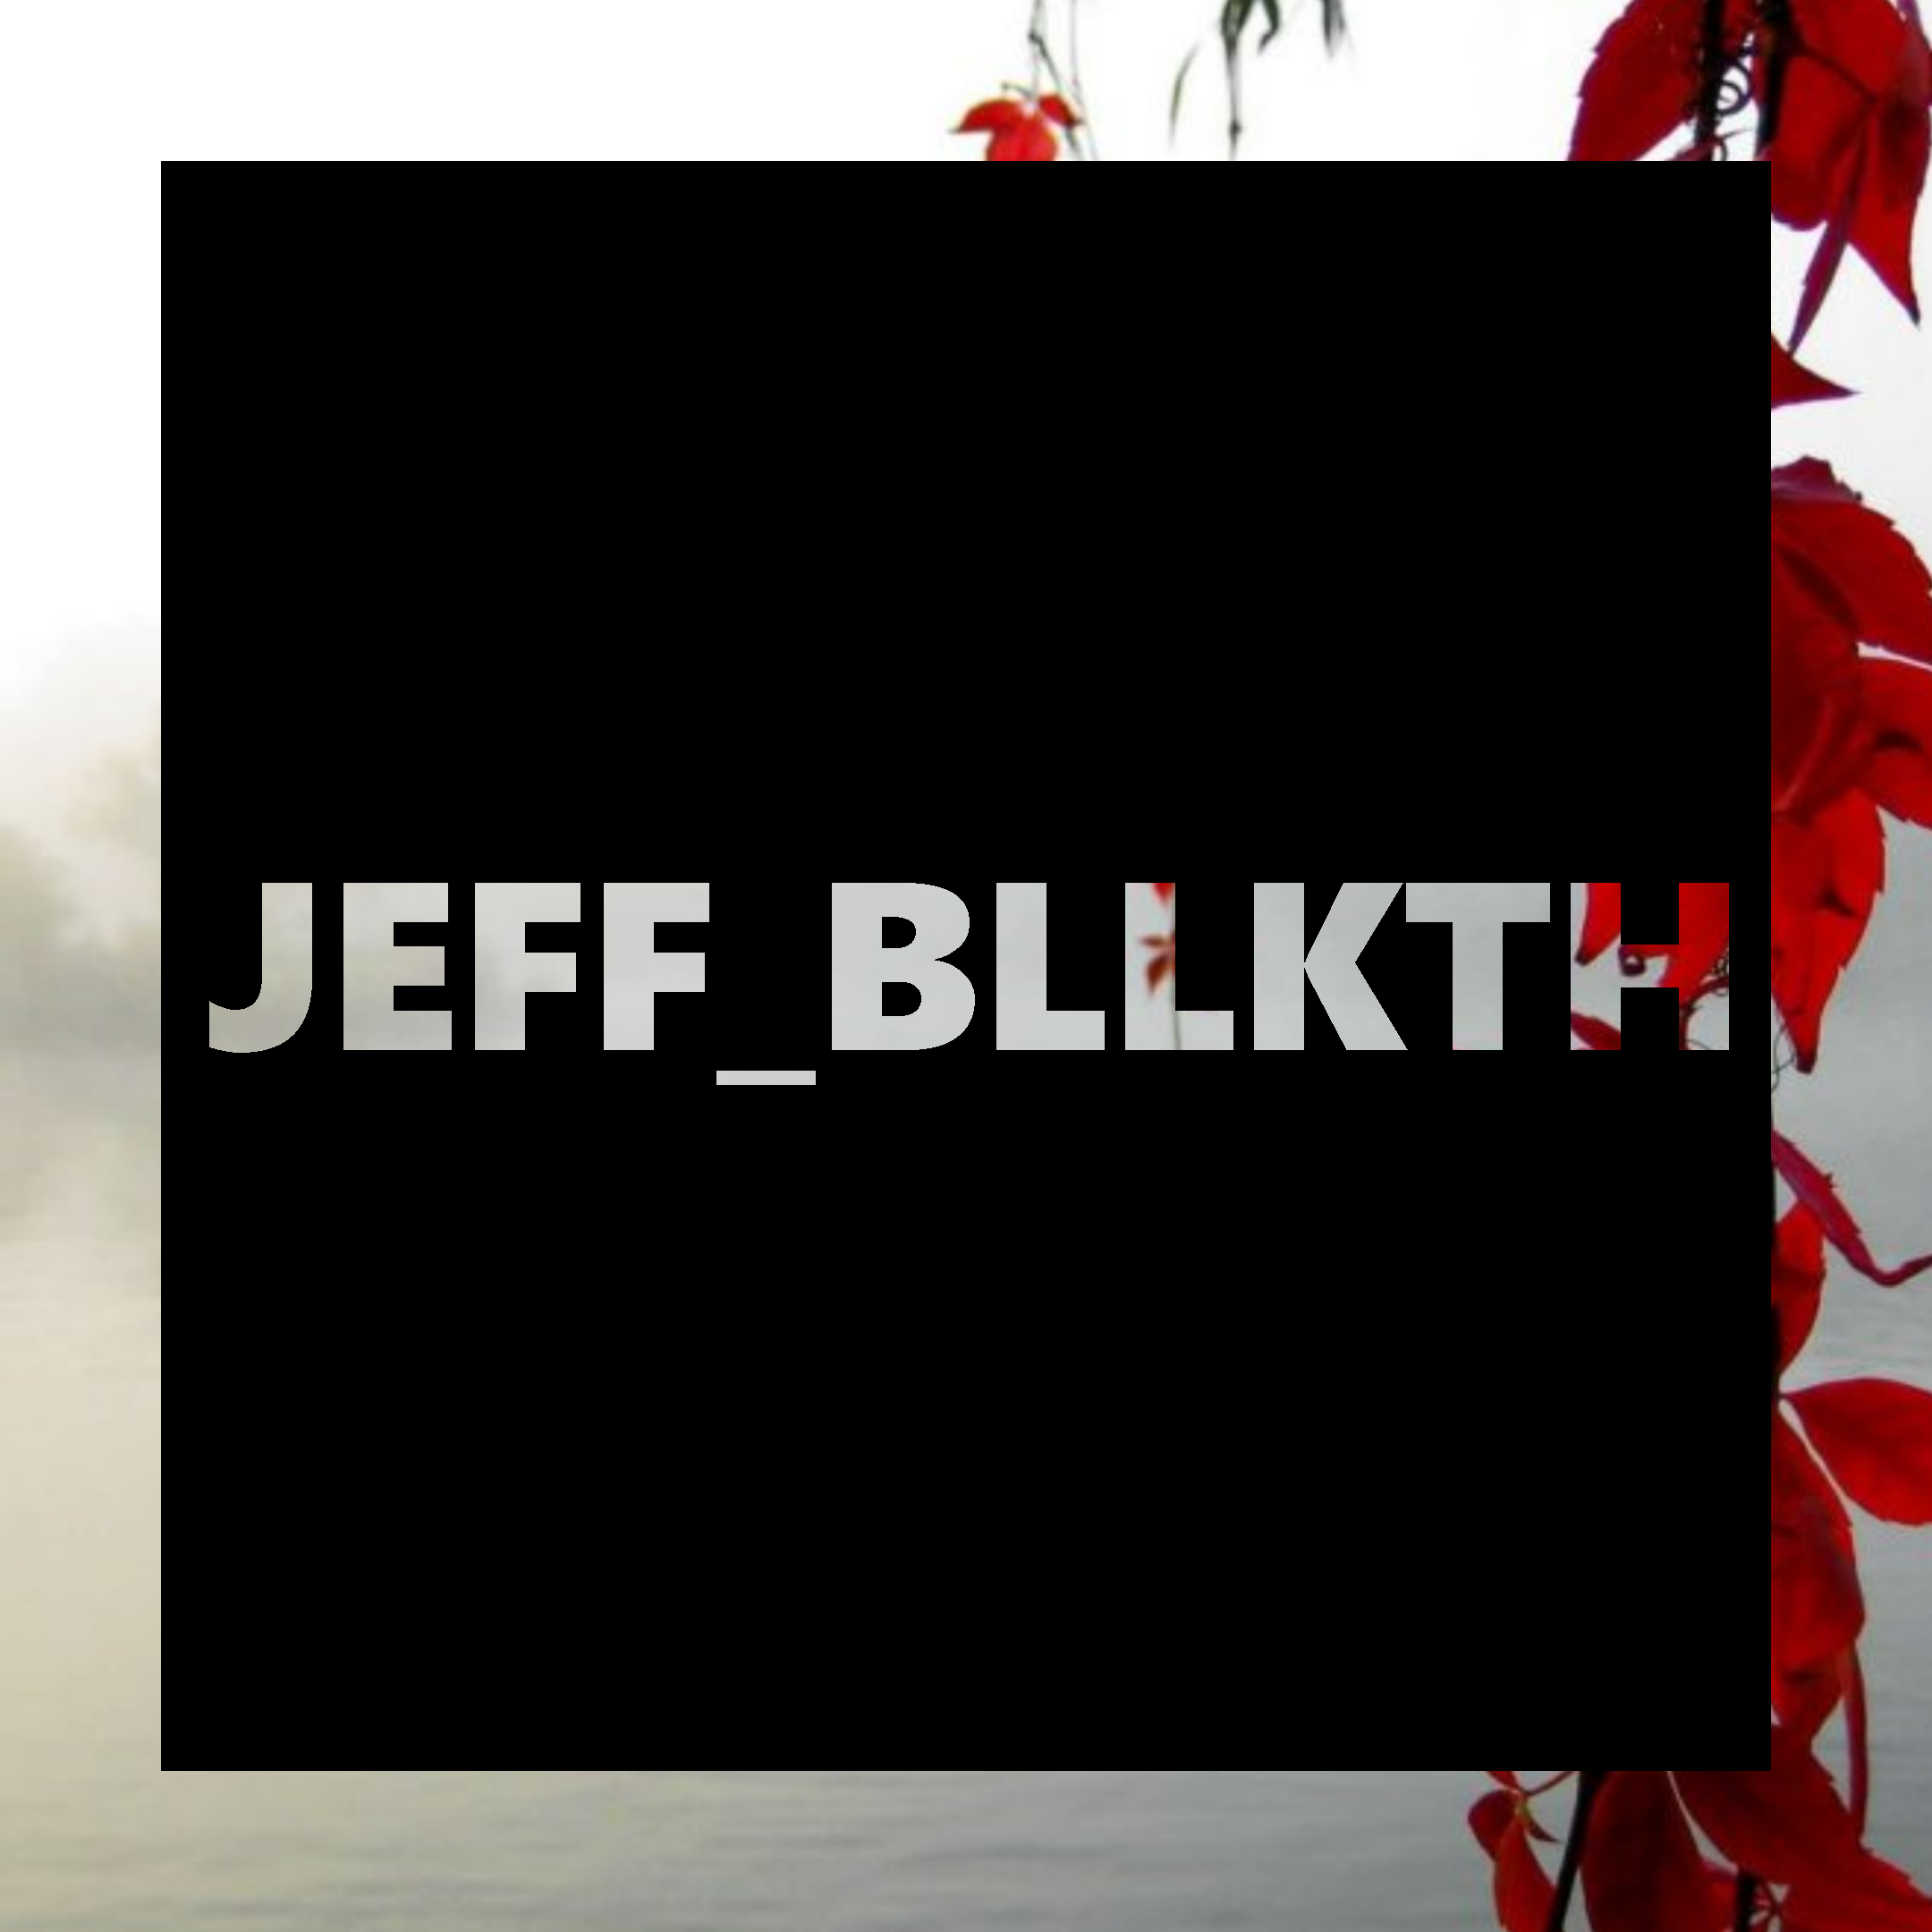 Jeff_Bllkth.png